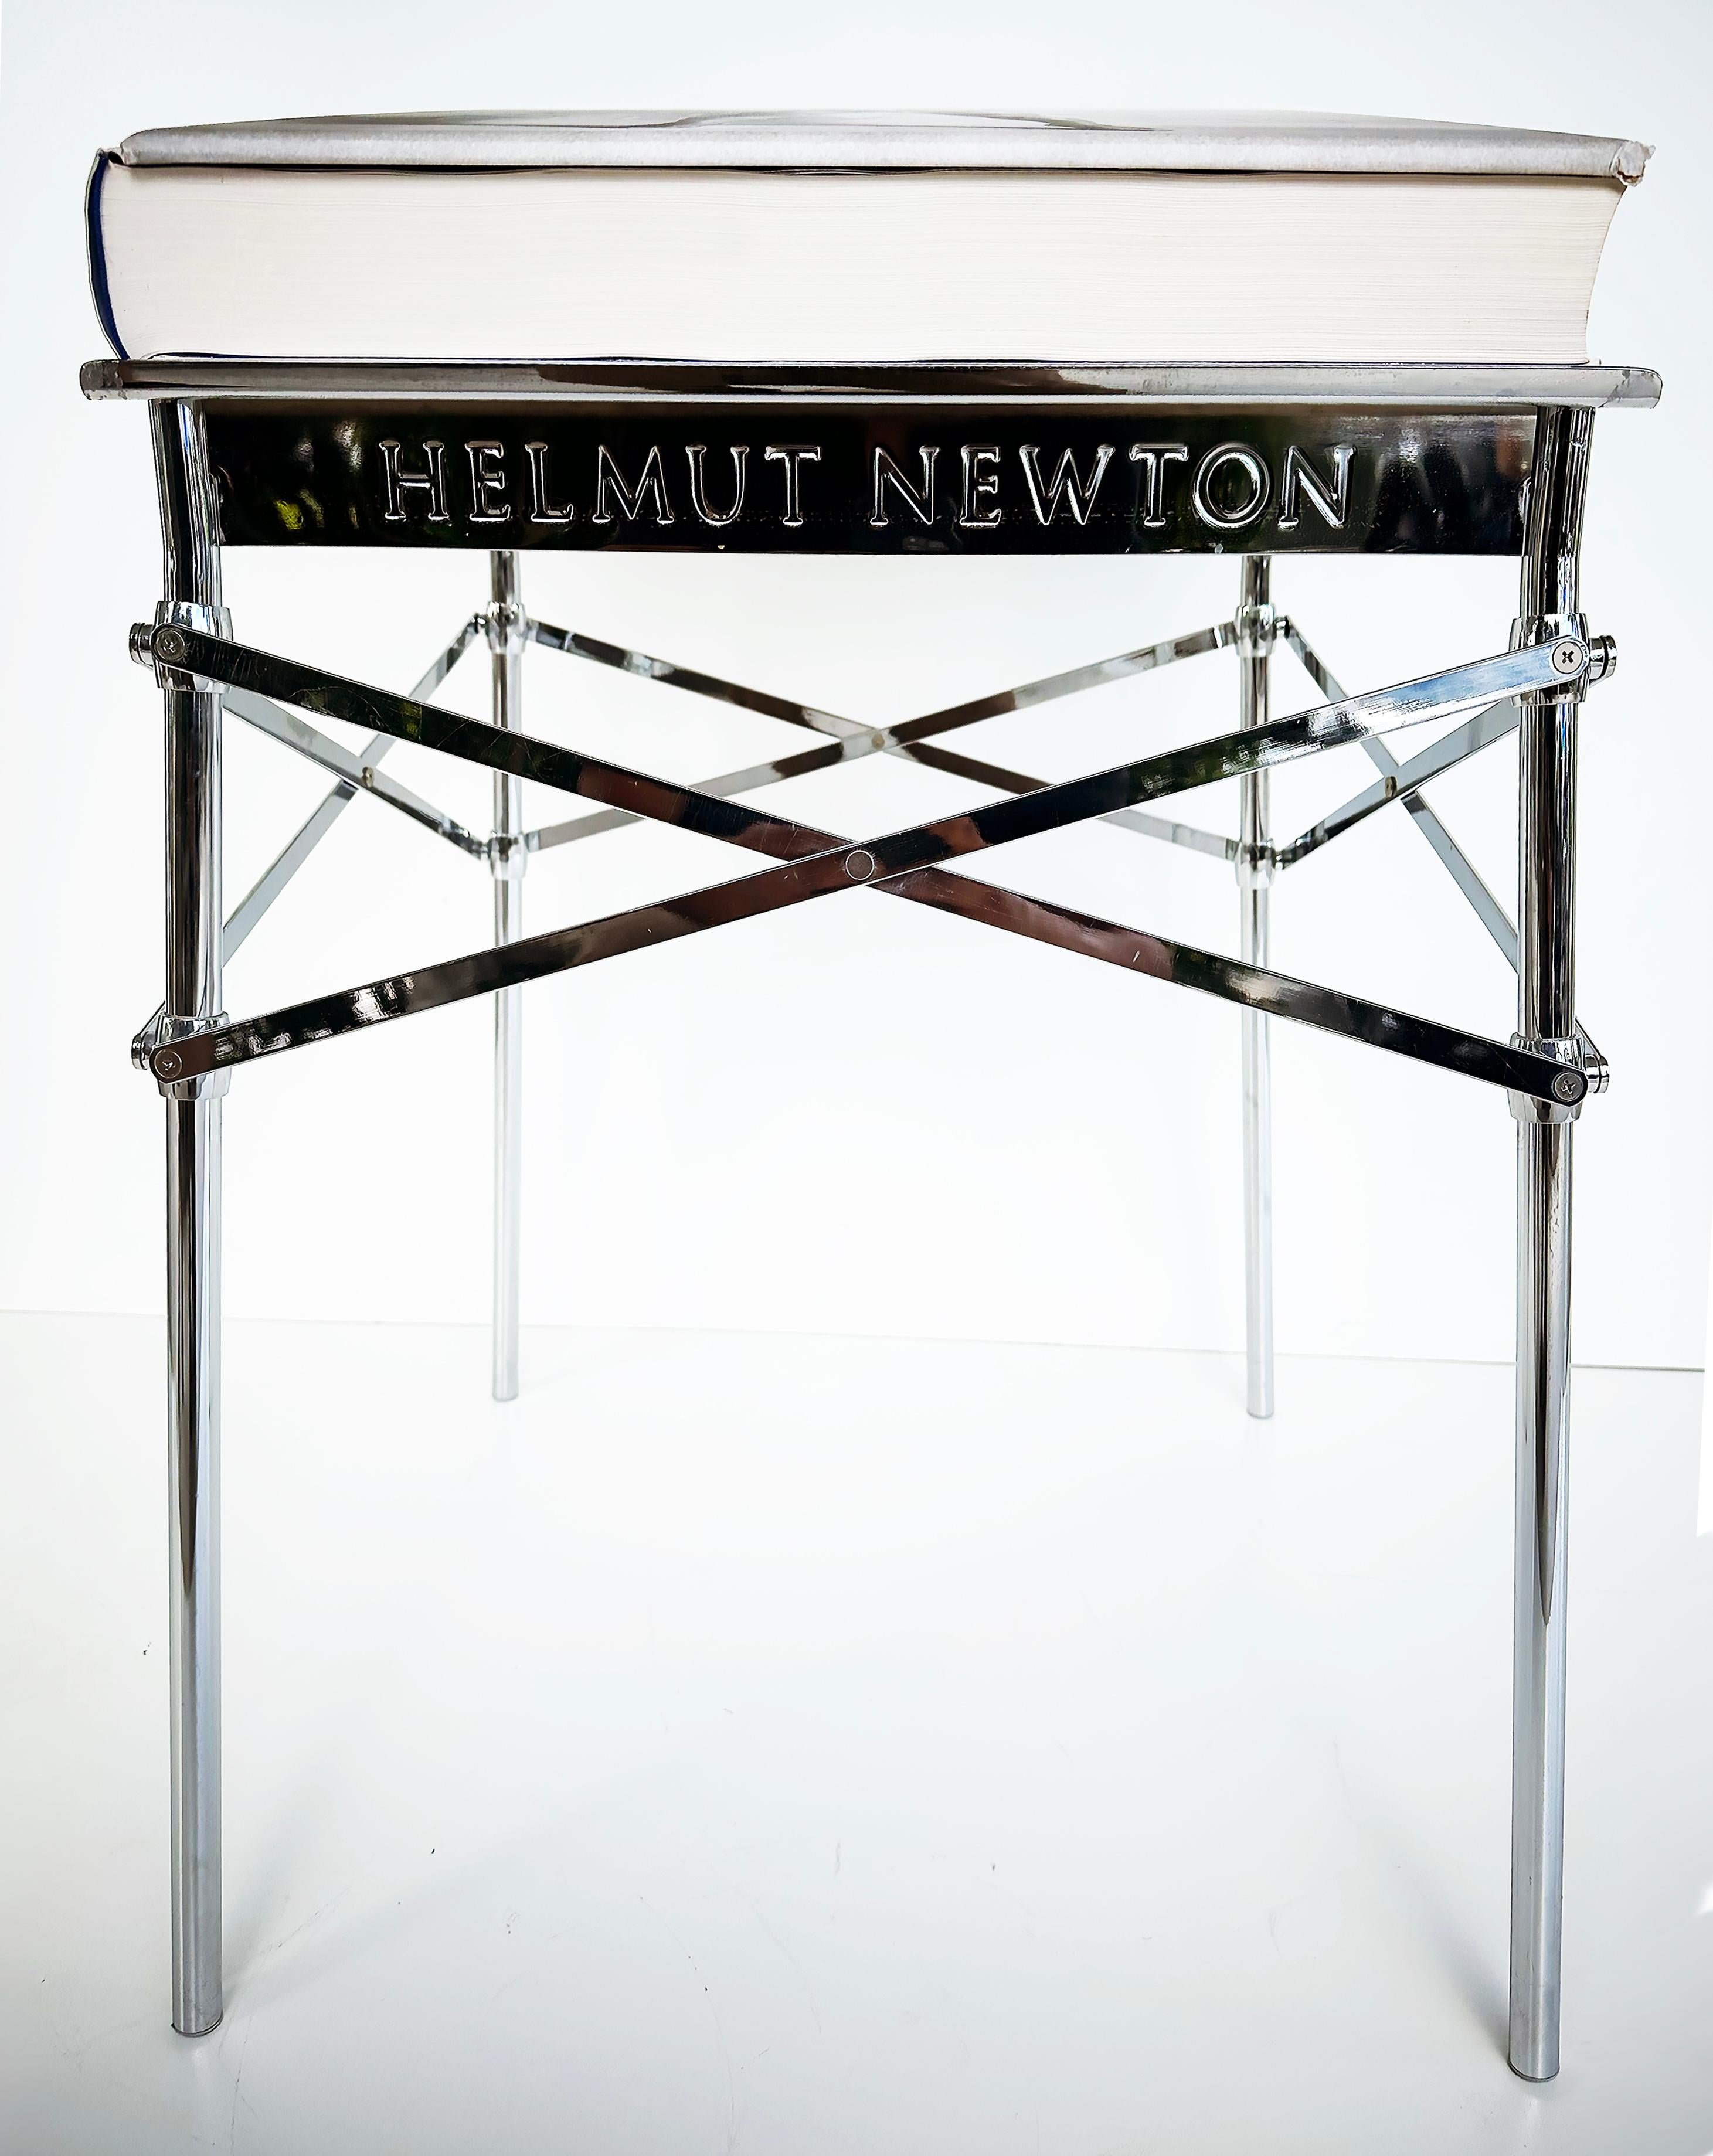 Helmut Newton Sumo Taschen Book, Philippe Starck Stand, Signed Limited Edition en vente 9